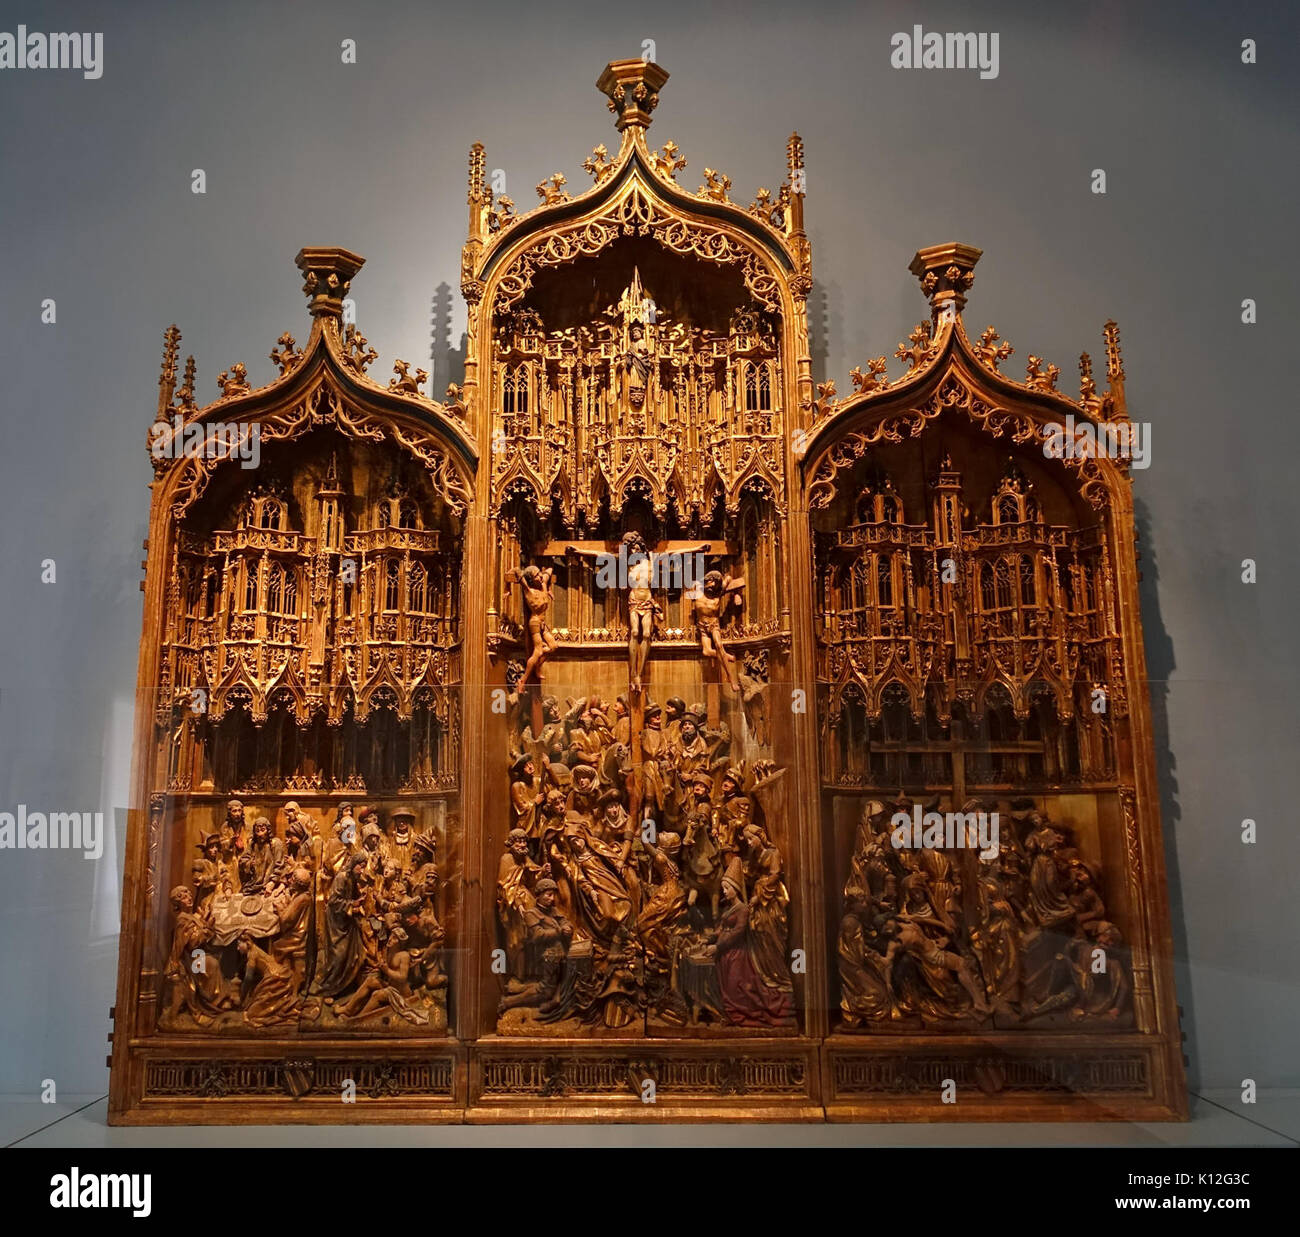 Altar with Passion scenes, donated by Claudio Villa and Gentina Solaro, Brabant, Brussels, c. 1470, oak, polychrome, gilding   Cinquantenaire Museum   Brussels, Belgium   DSC08610 Stock Photo